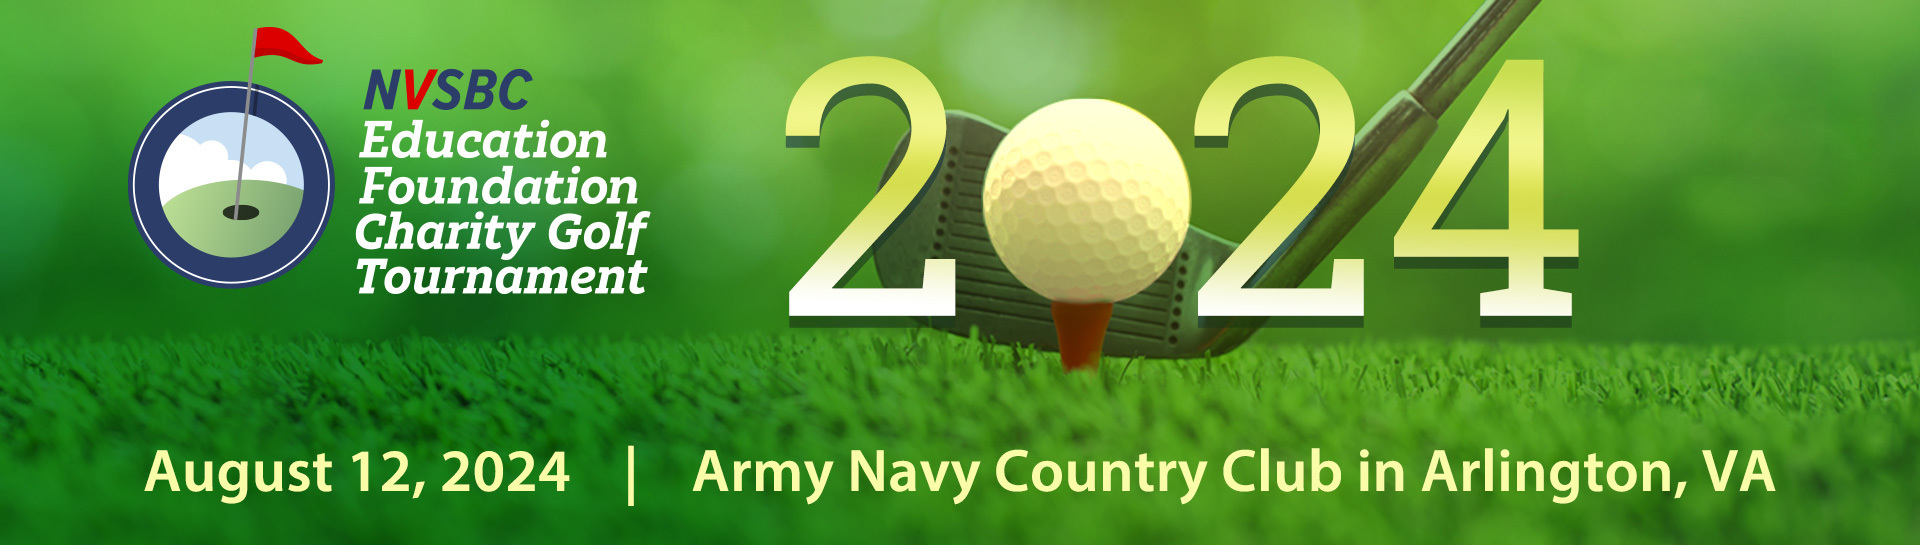 NVSBC 2024 Charity Golf Tournament